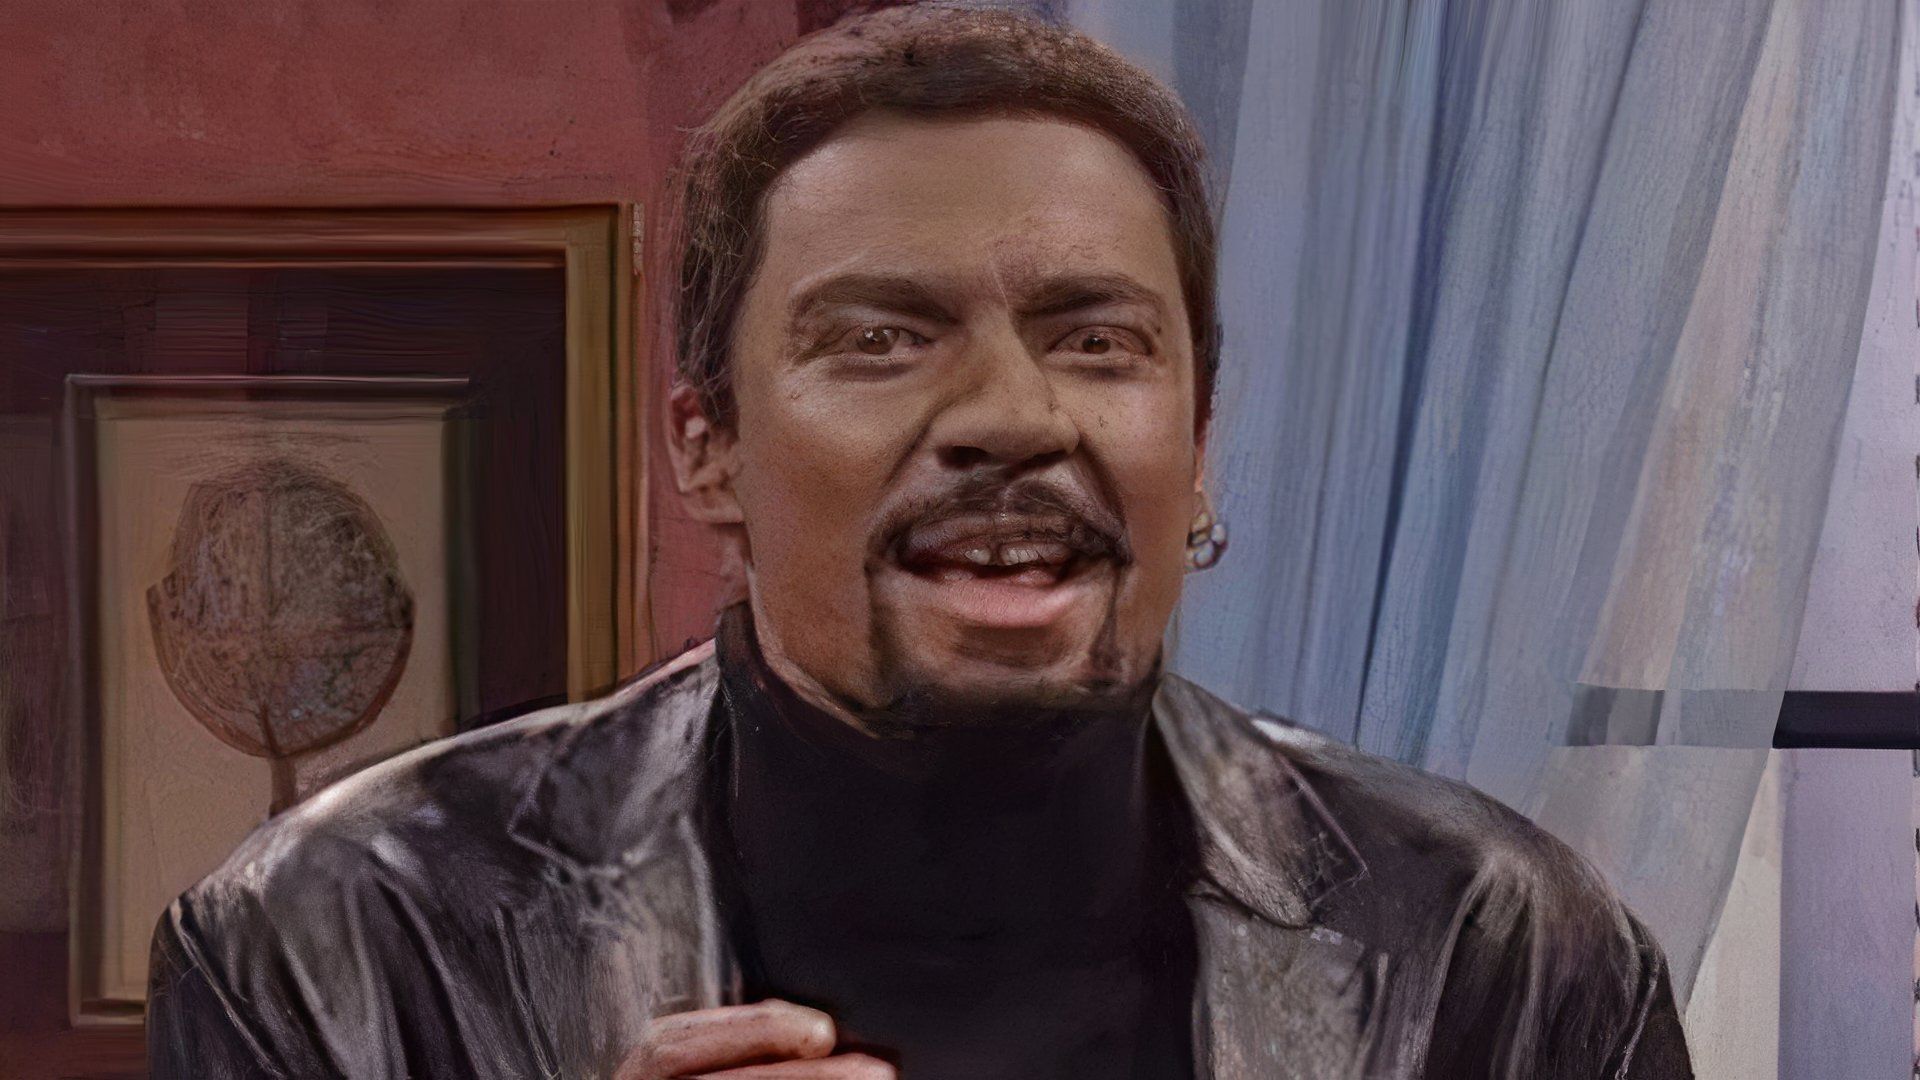 Jimmy Fallon impersonates Chris Rock in Saturday Night Live